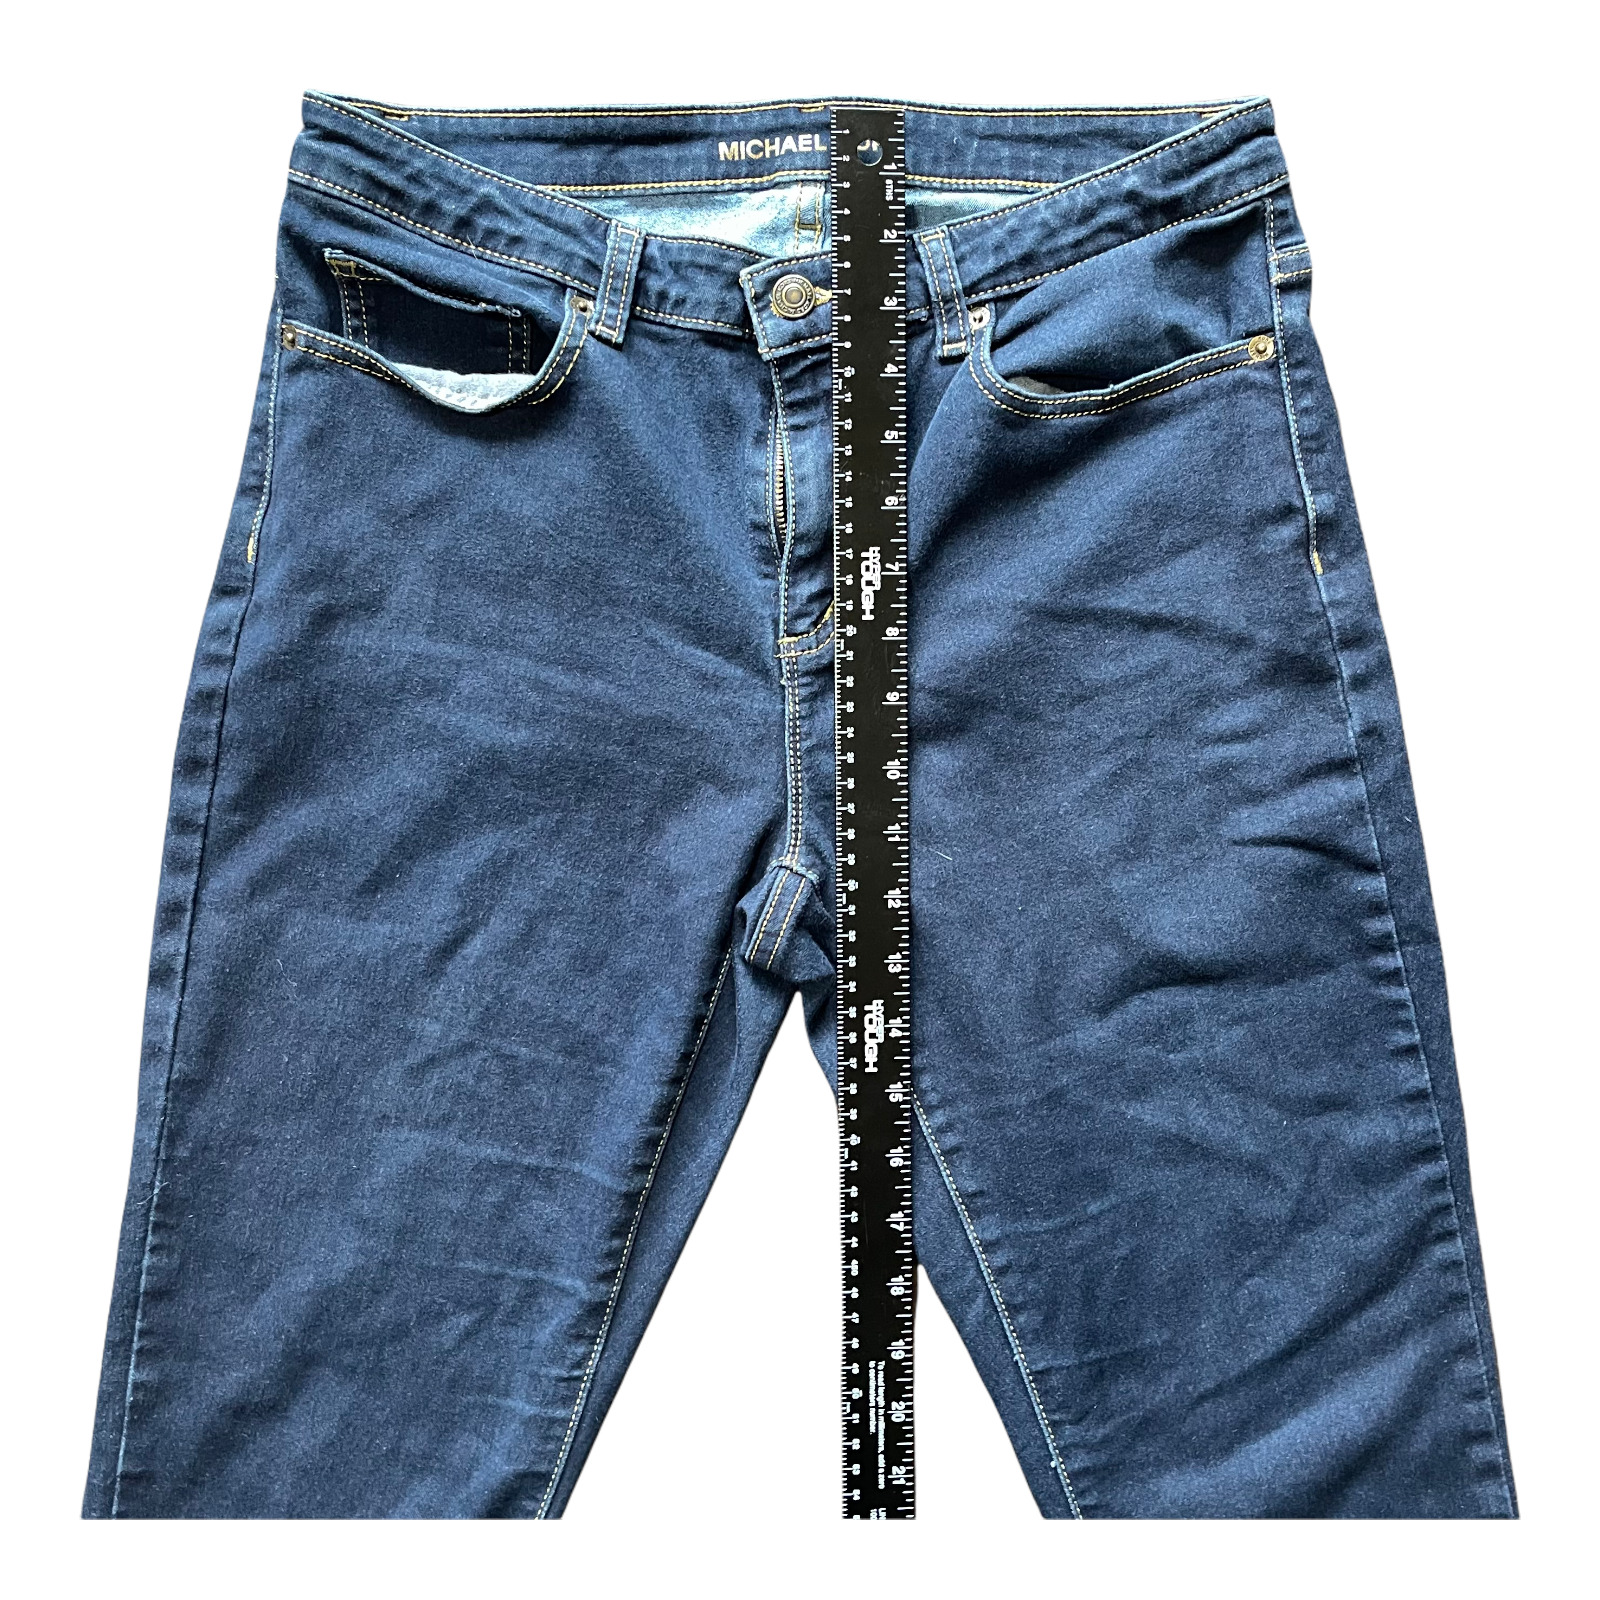 Michael Kors Womens Jeans Izzy Skinny Size 10 - image 2